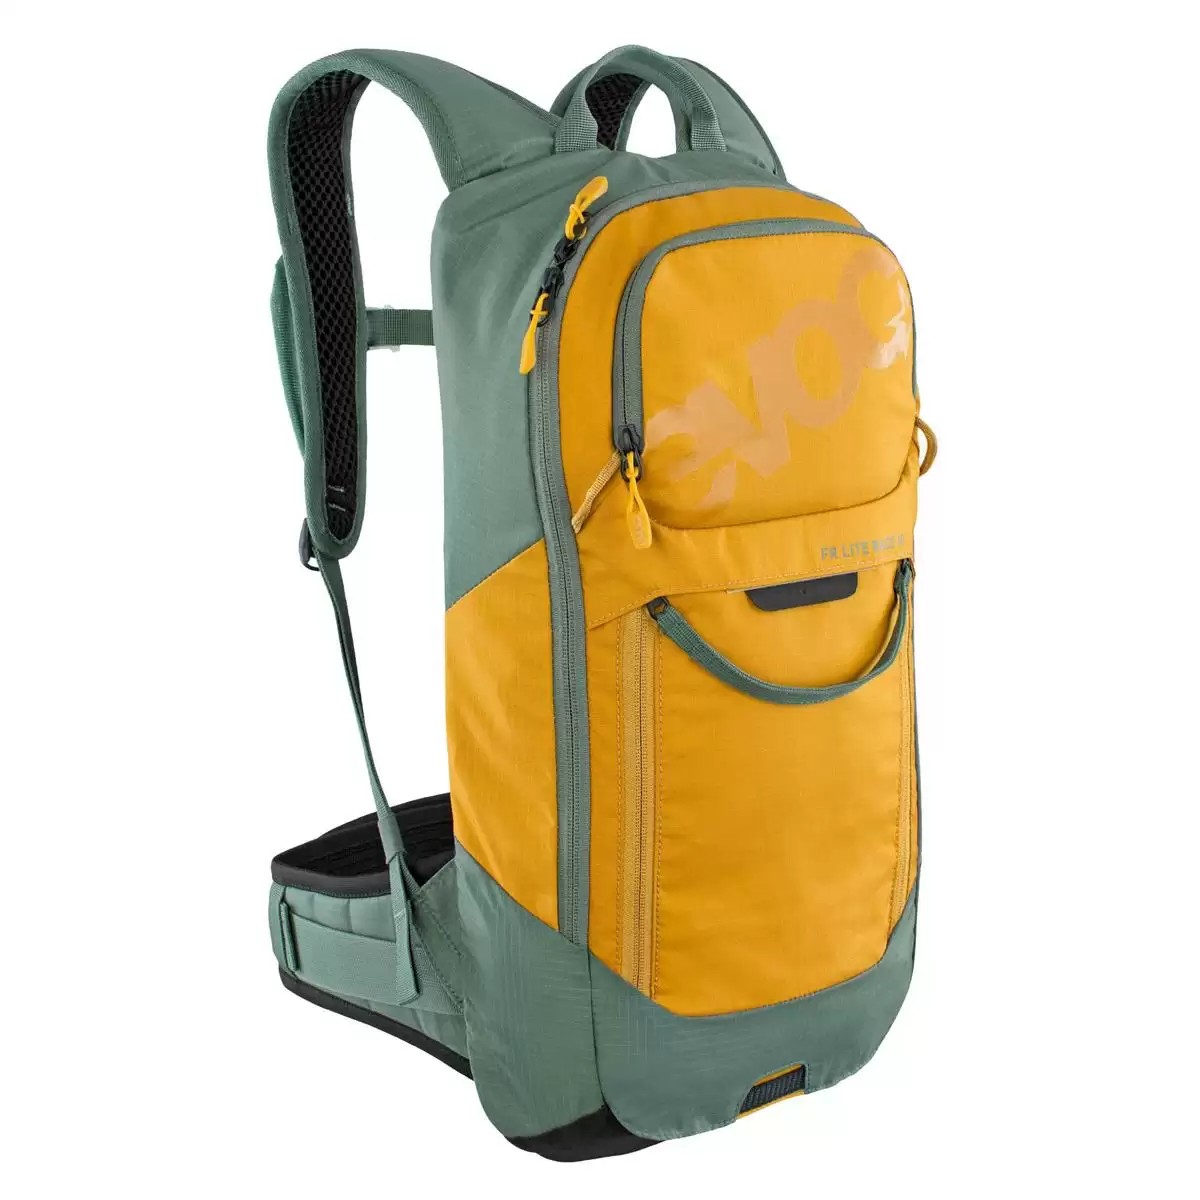 FR LITE RACE 10 Backpack With Back Protector 10L Green/Orange Size S - image